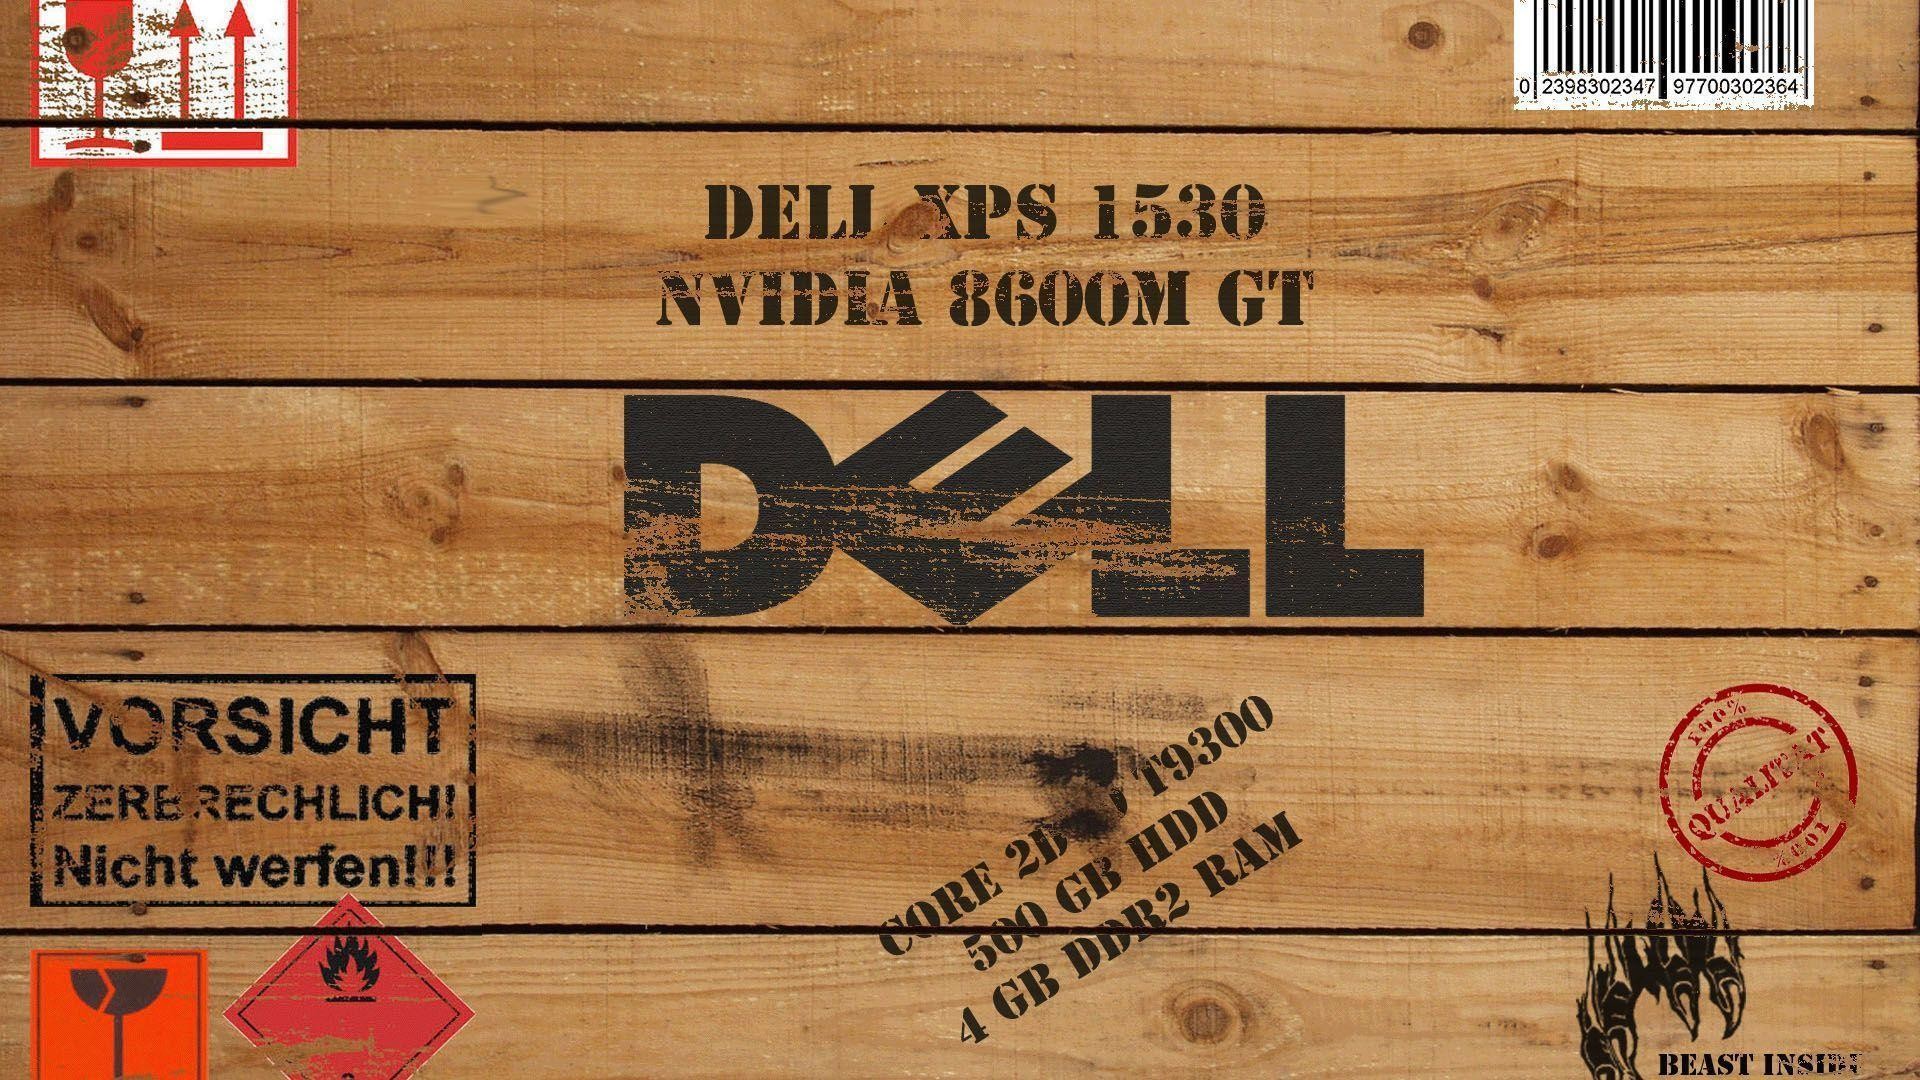 71 Dell Hd Wallpaper 19 1080